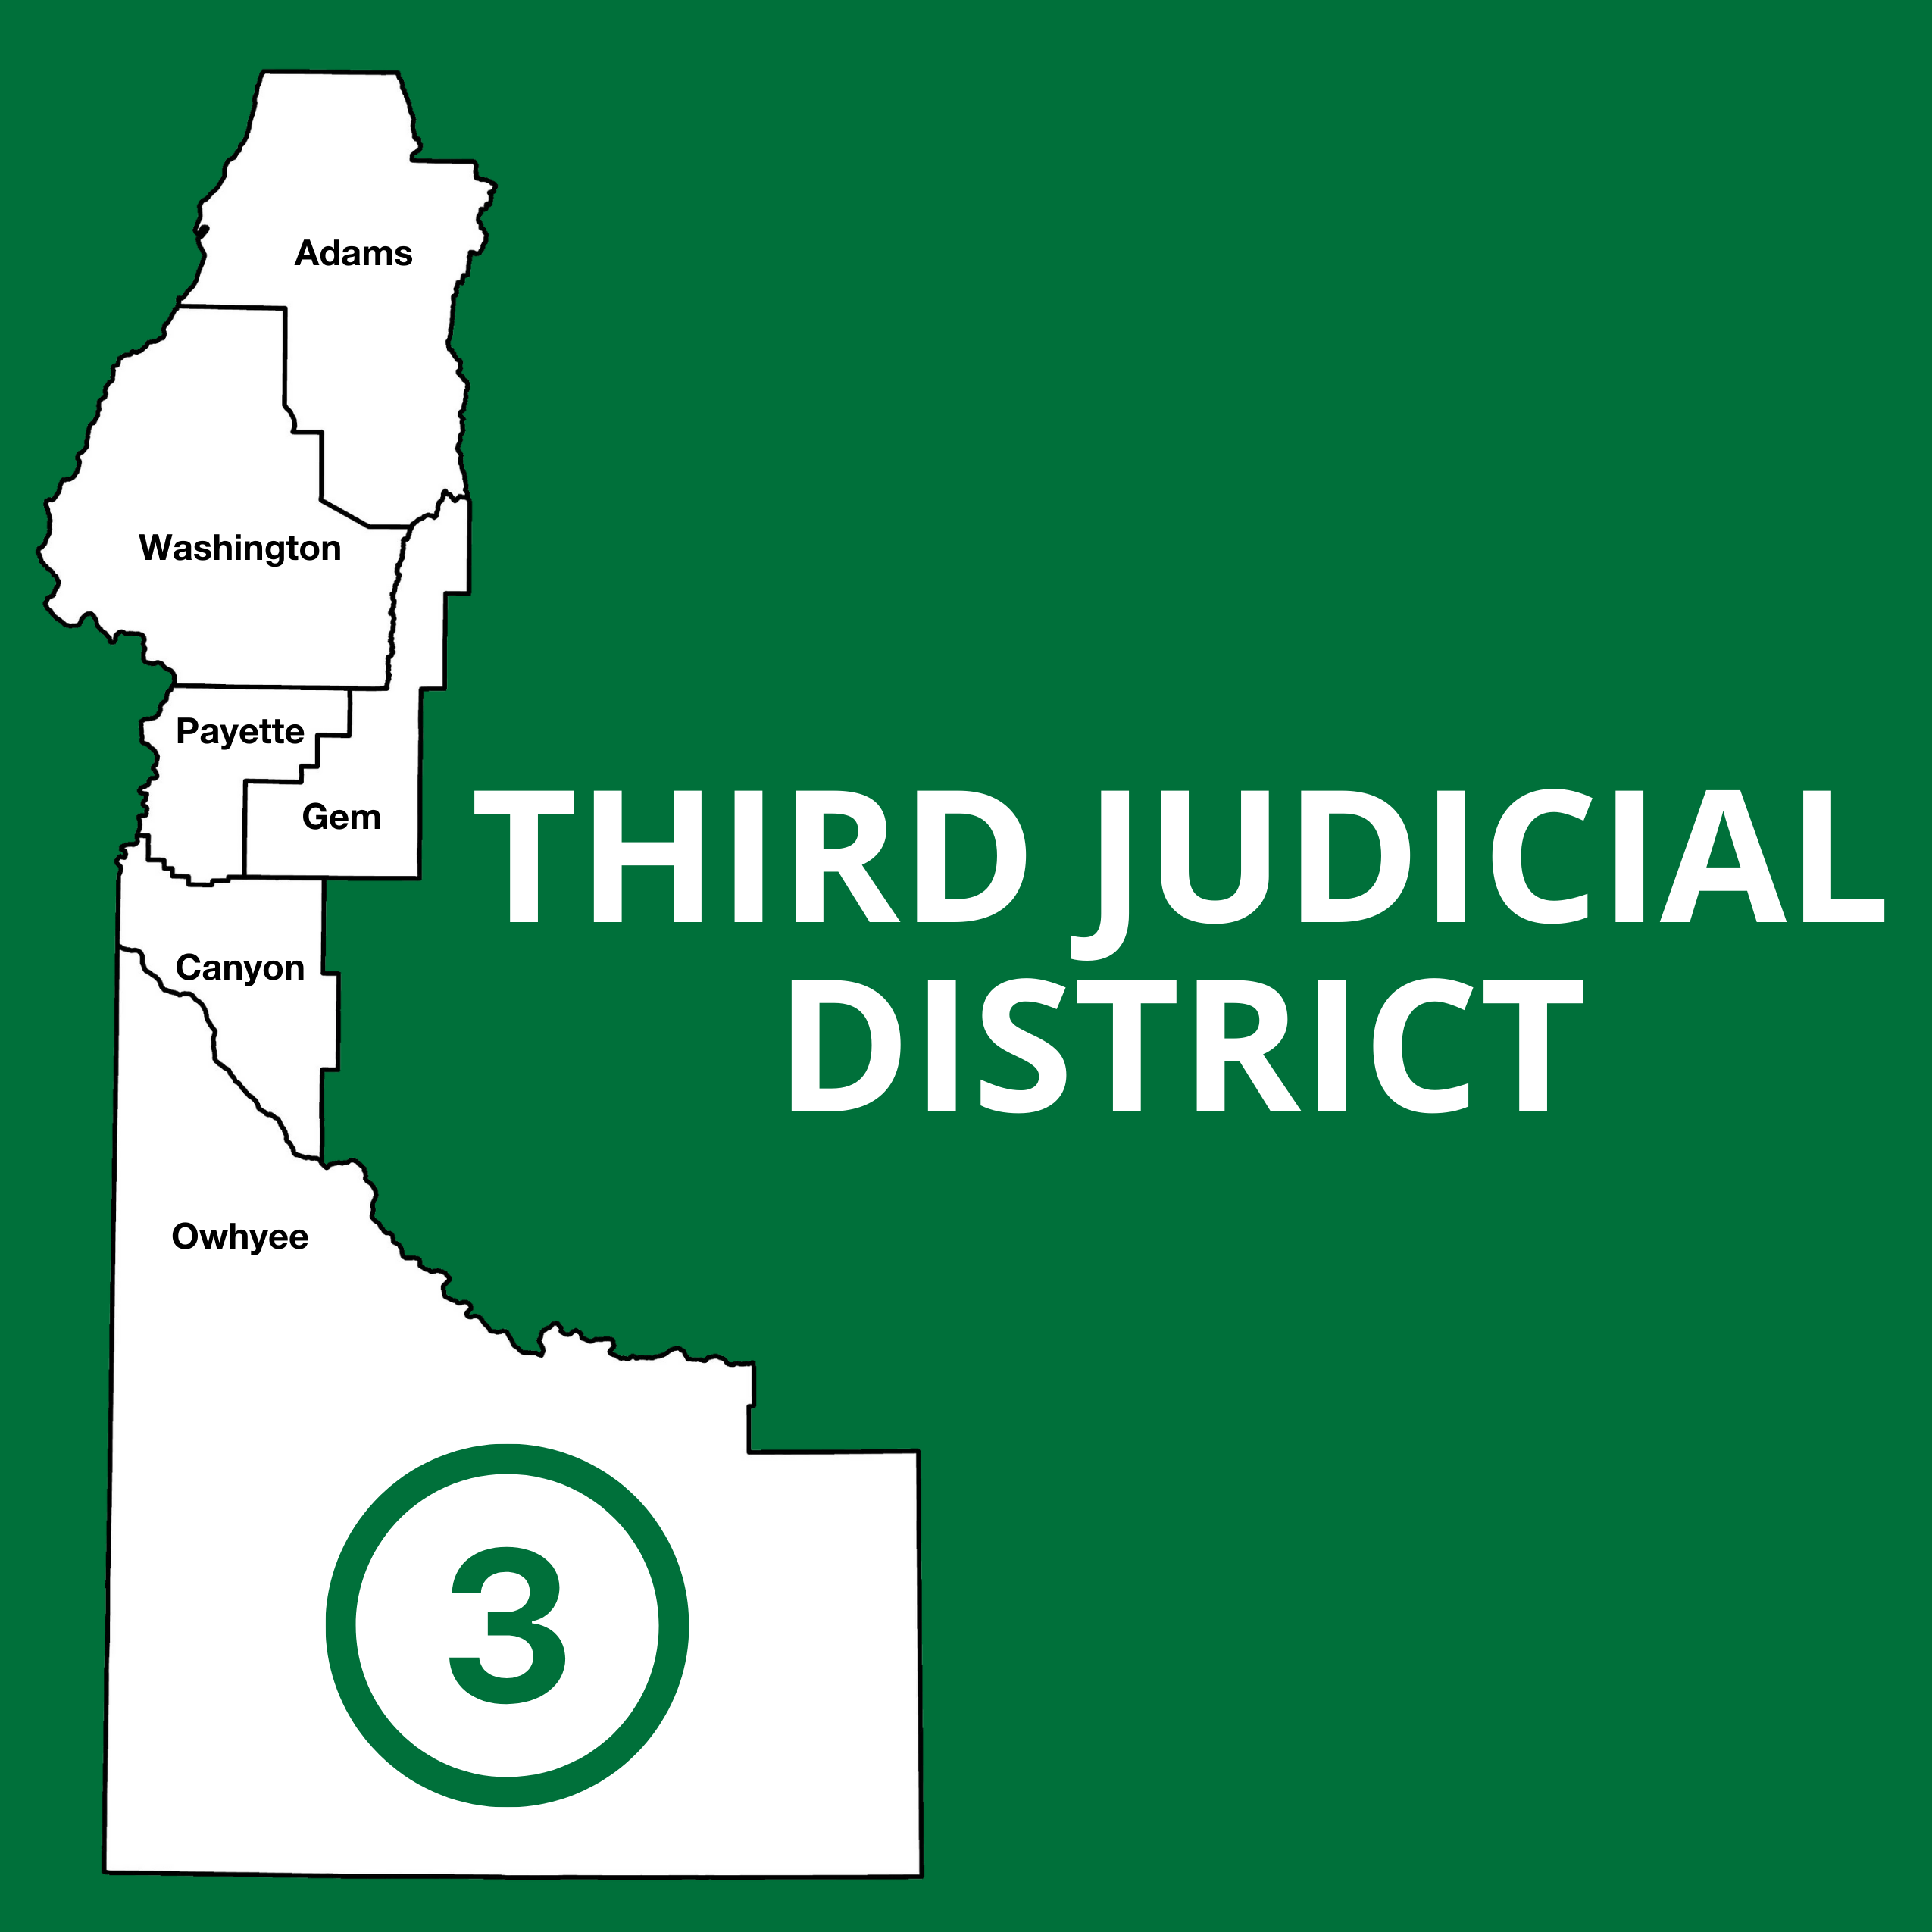 Third Judicial District of Idaho